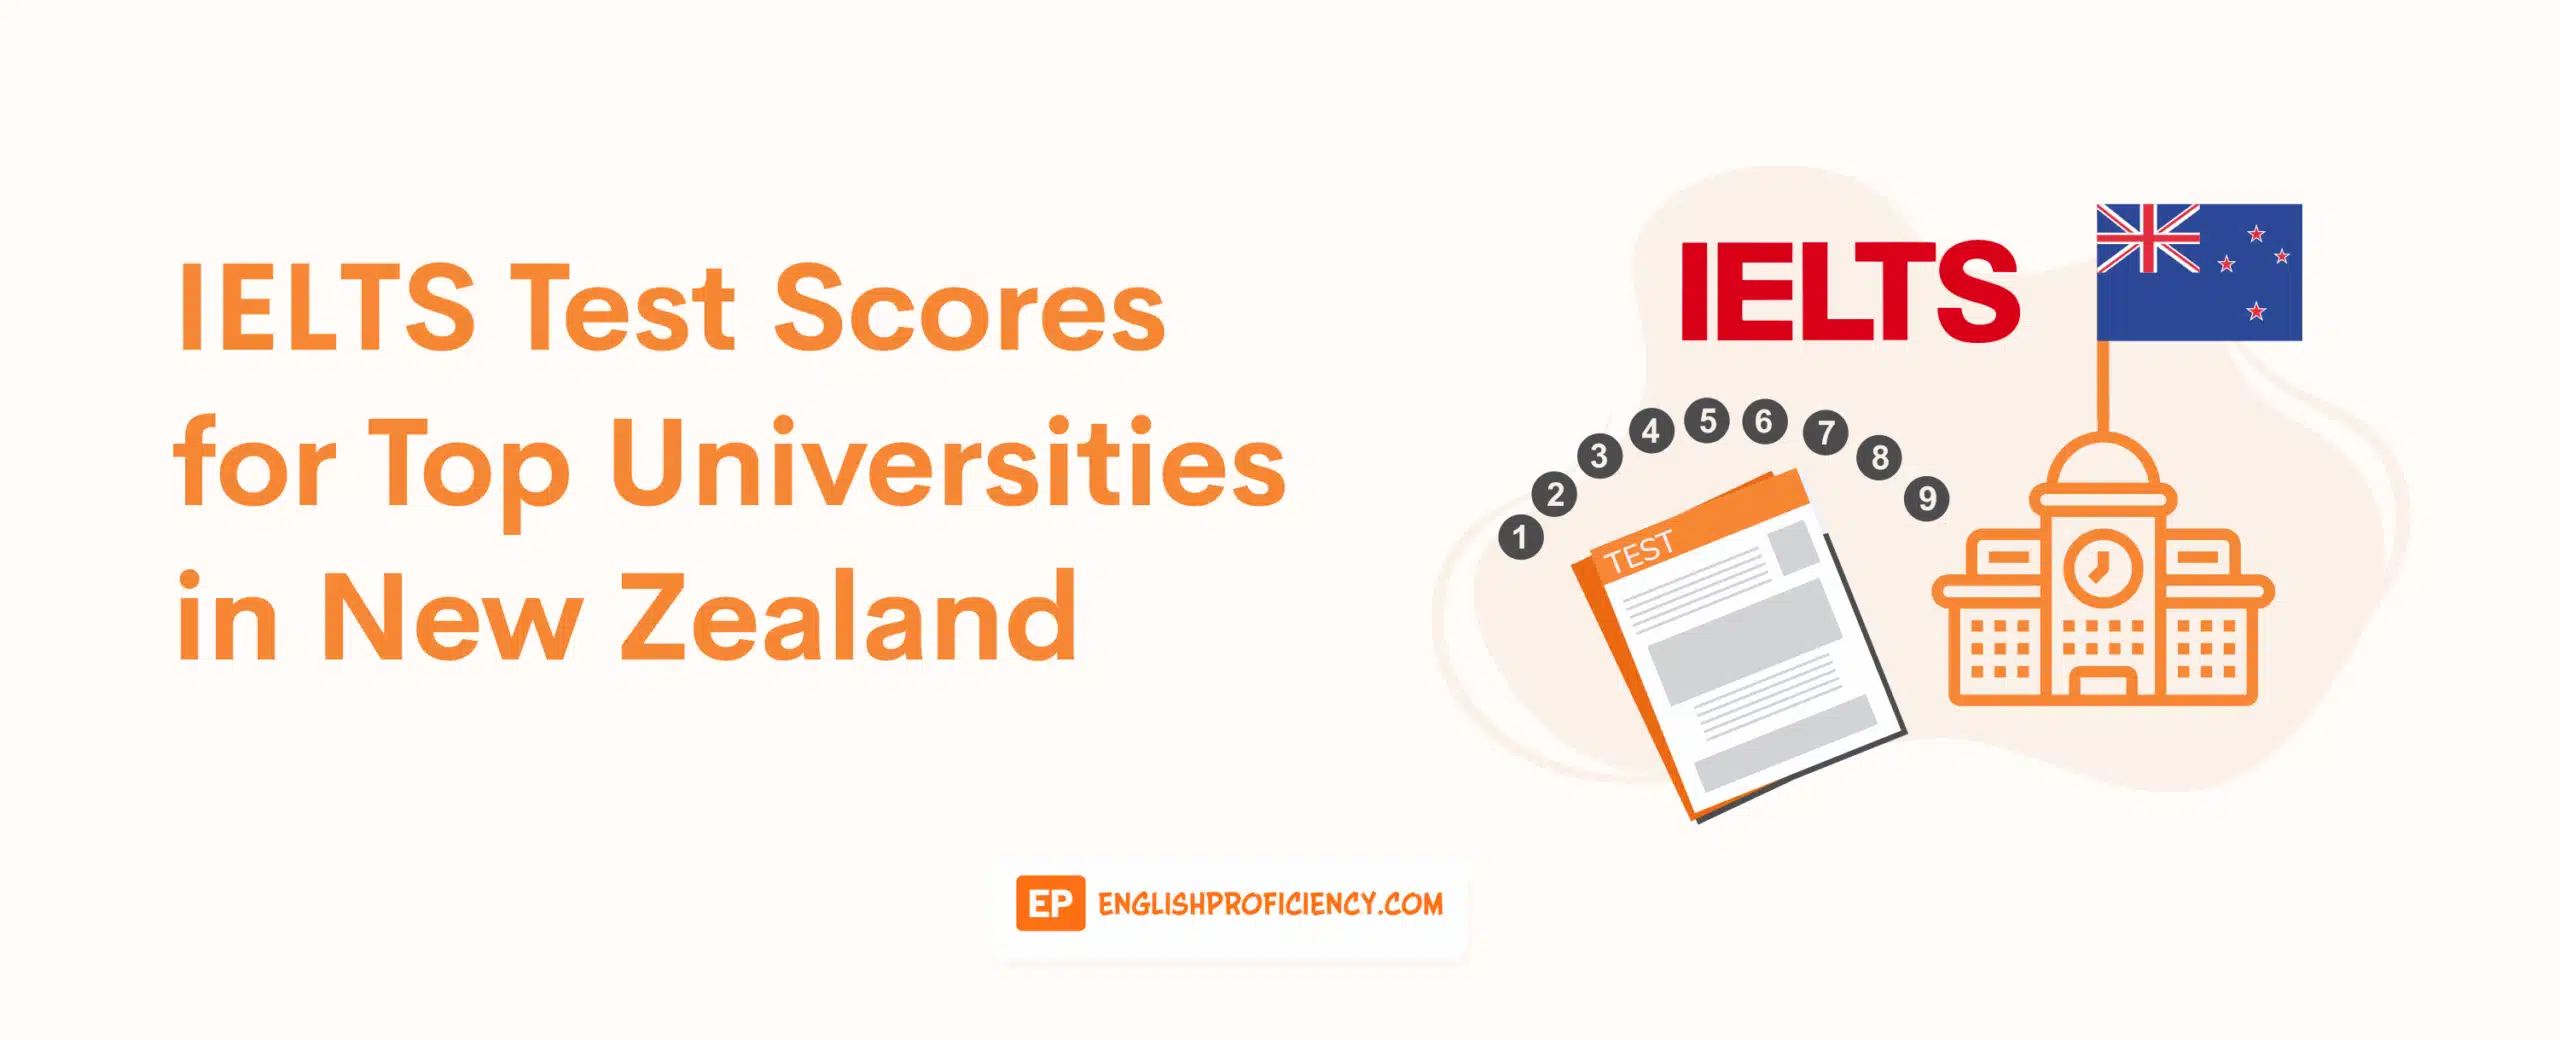 IELTS Test Scores for the Top Universities in New Zealand